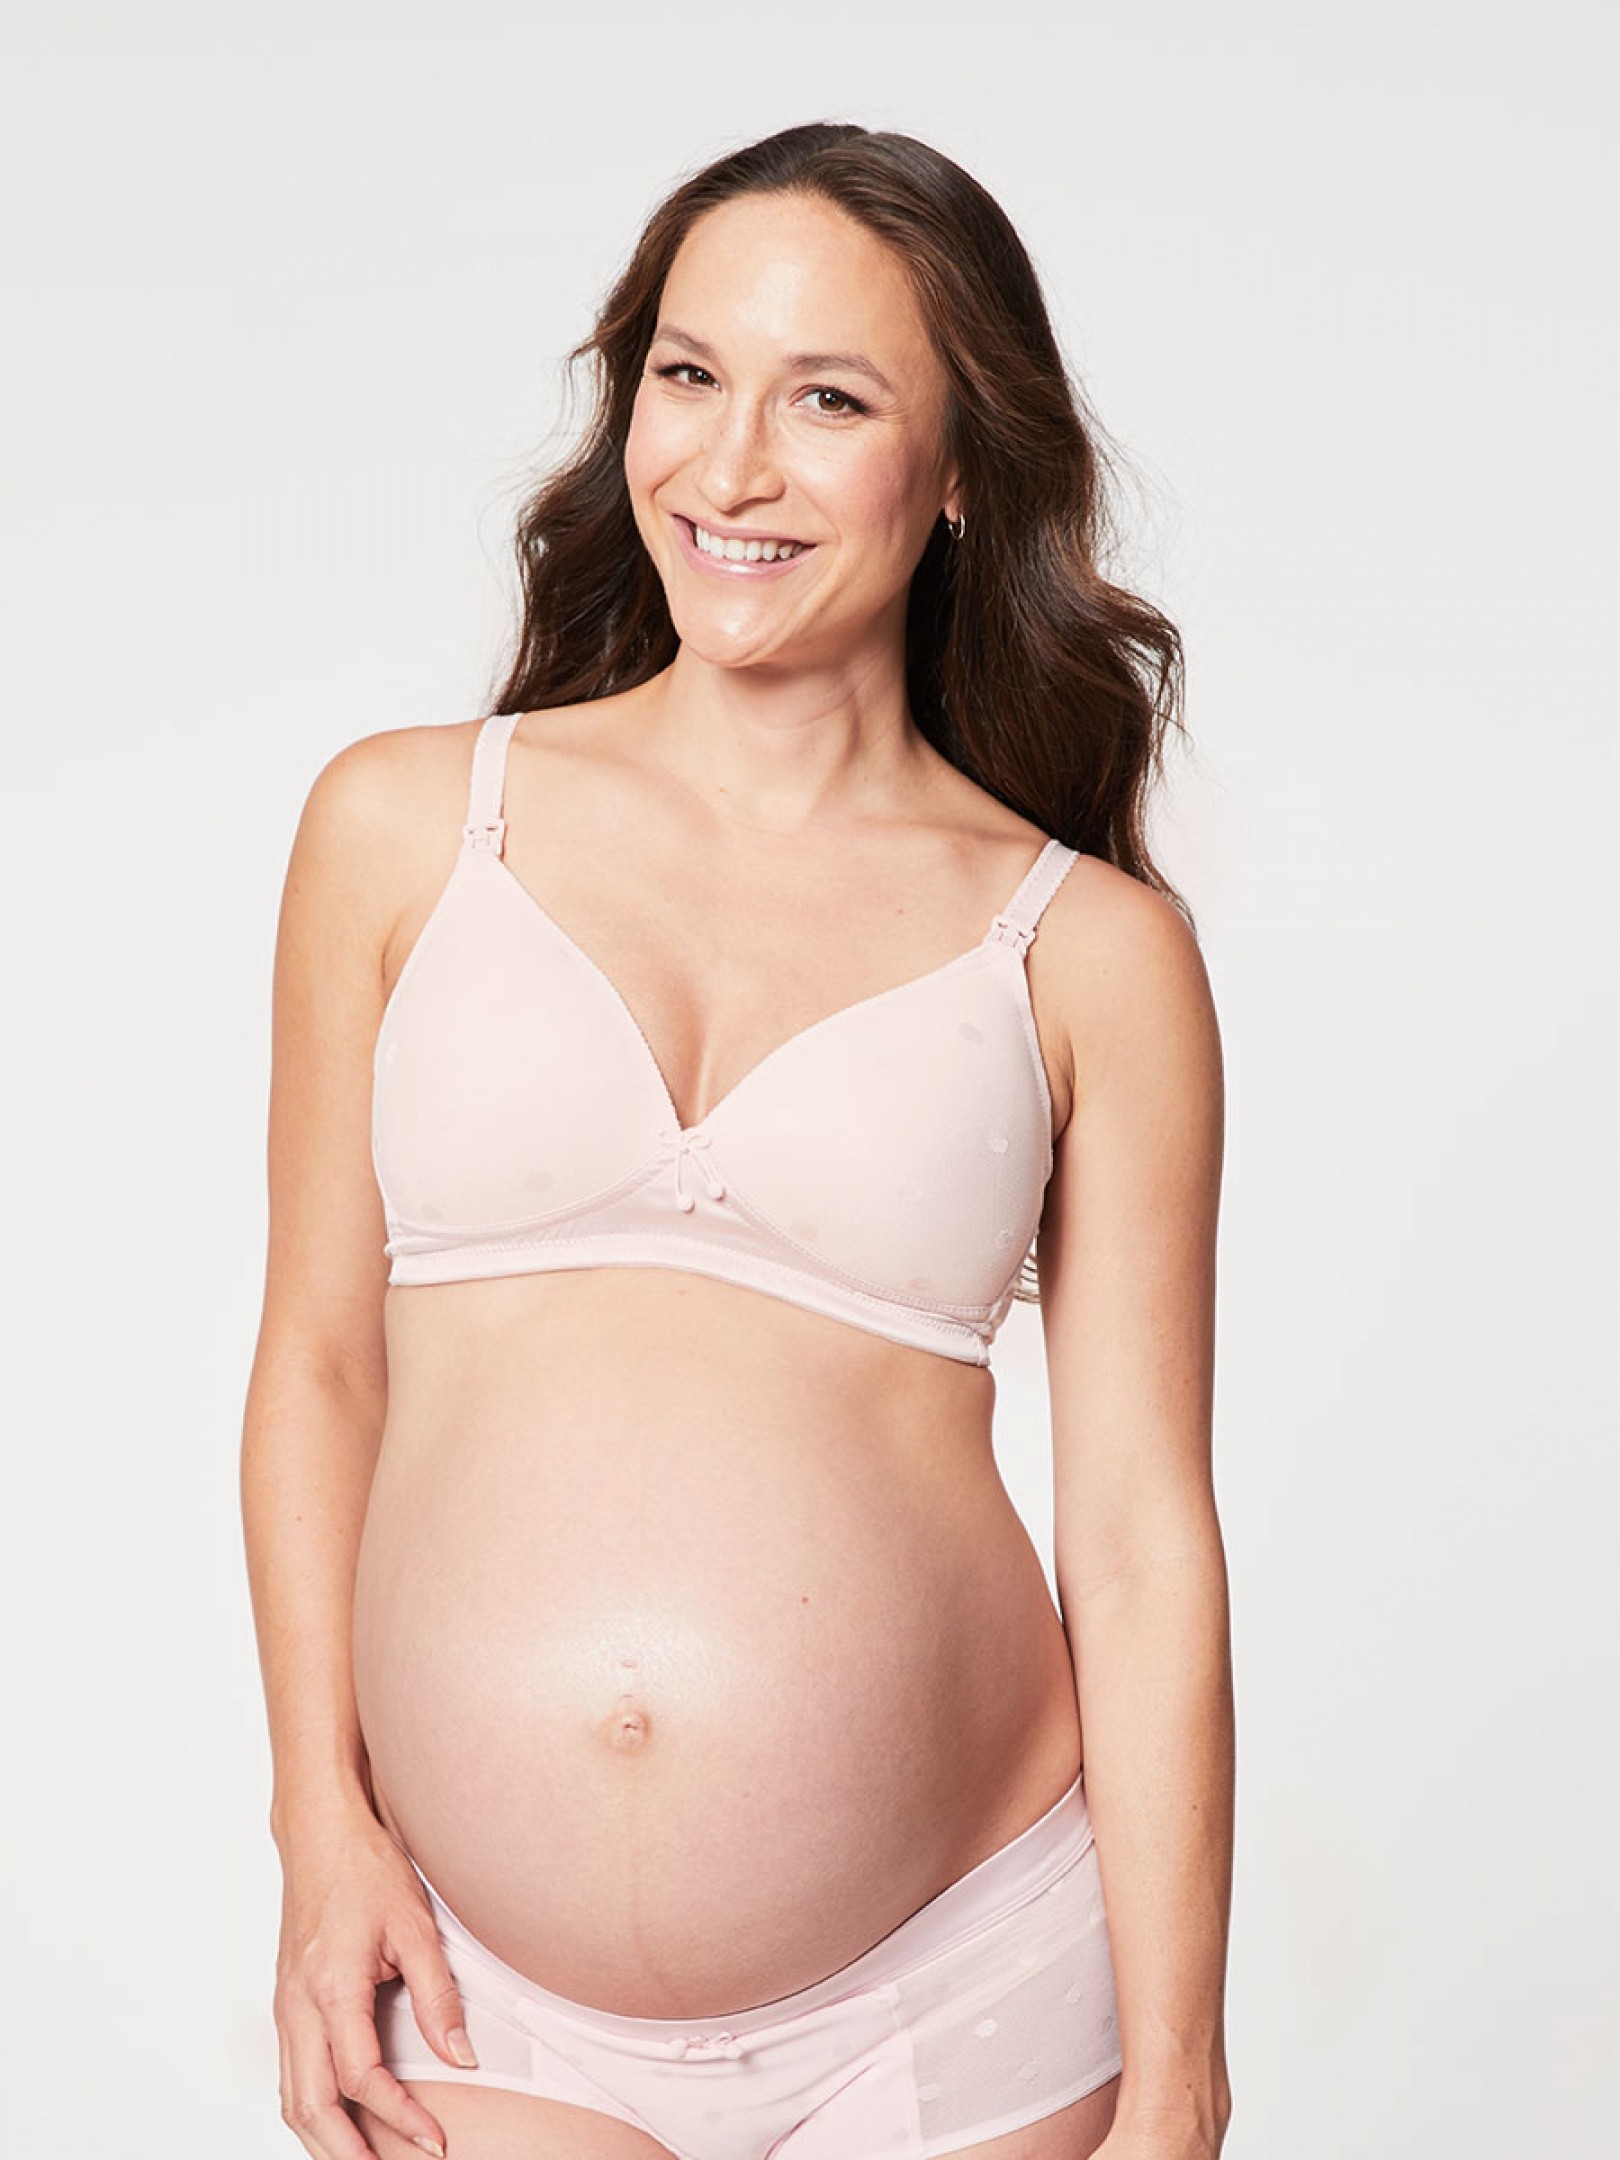 Buy Wireless Maternity Bra, Women Soft Cotton Pregnant Underwear  Breastfeeding Nursing Bras (34/75, Pink) at